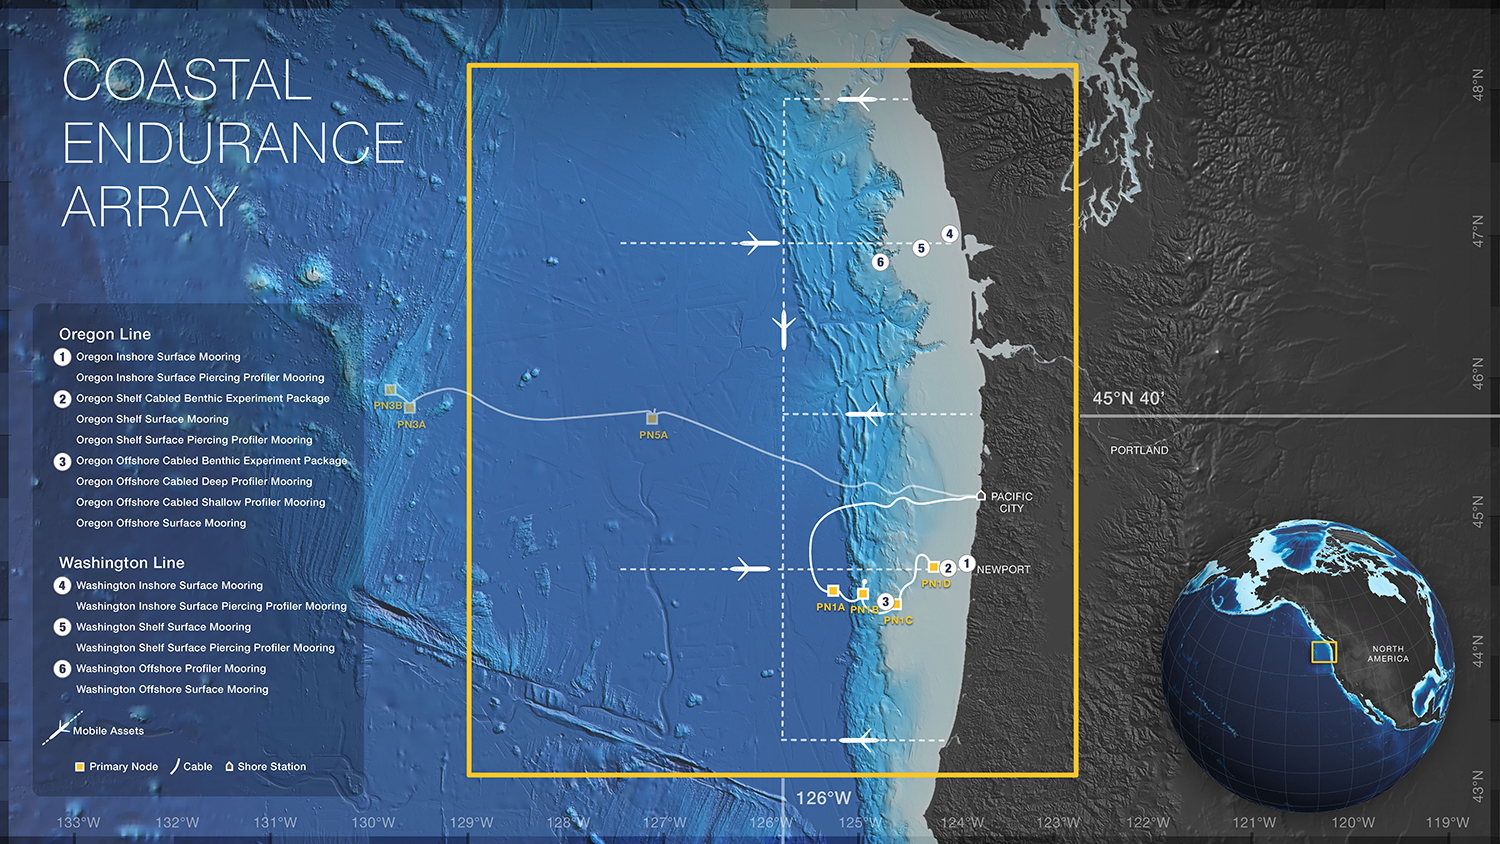 A map of the Coastal Endurance Array's coverage area.